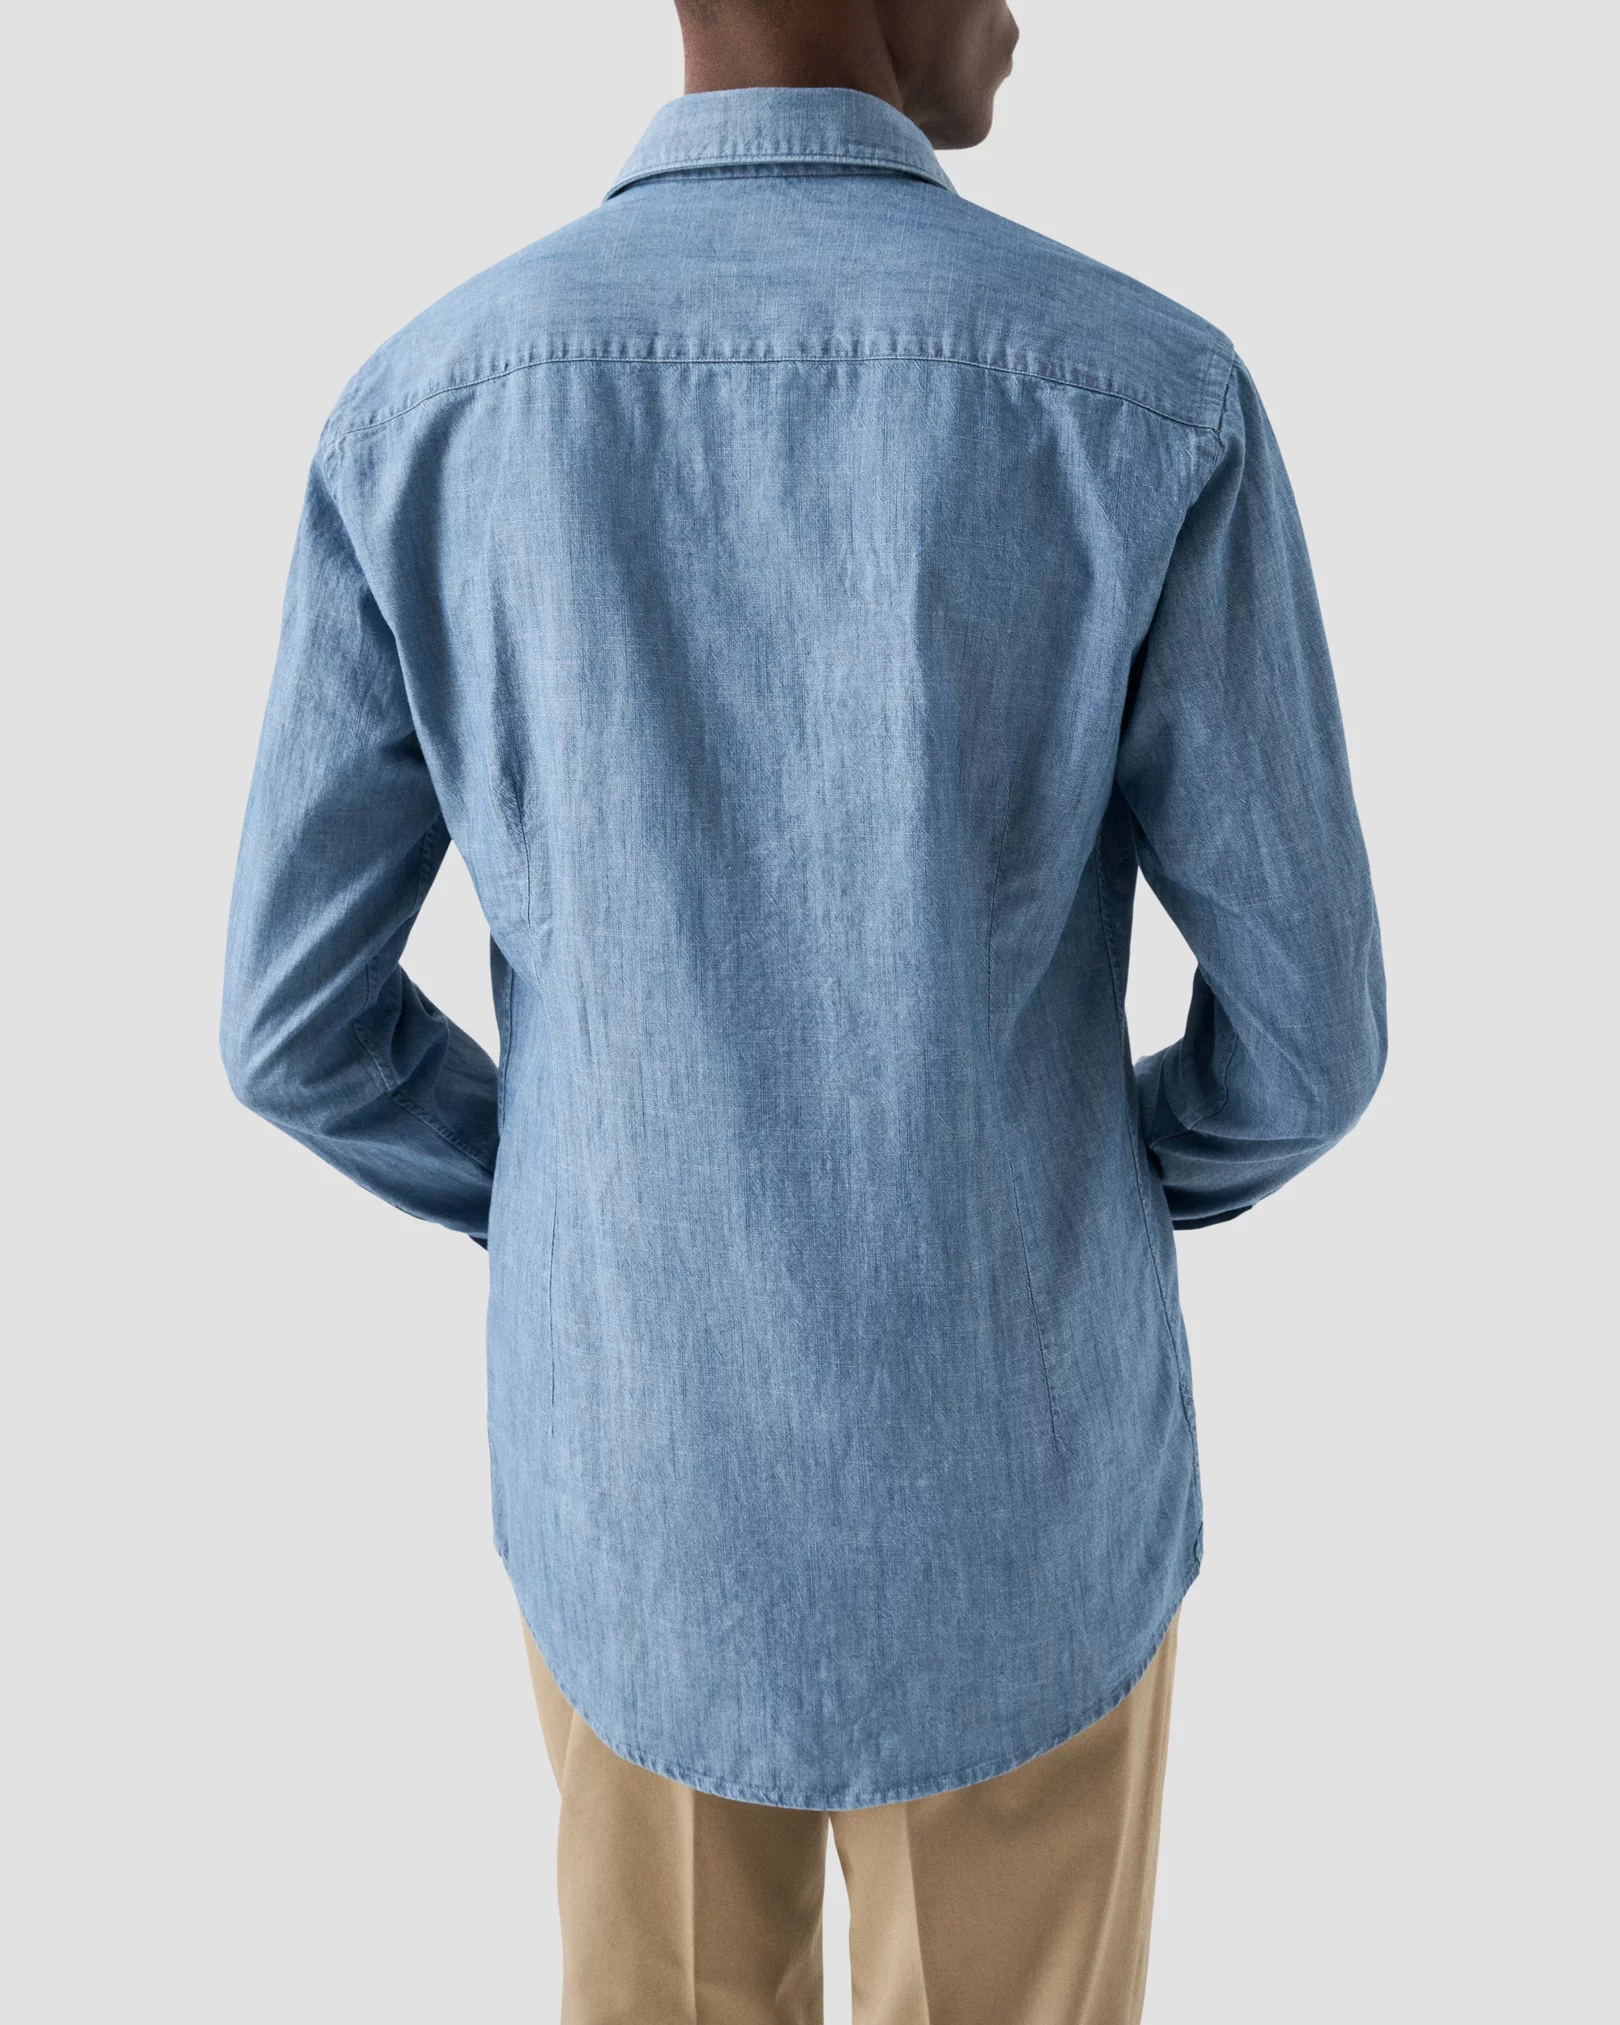 Eton - Light Blue Denim Twill Shirt